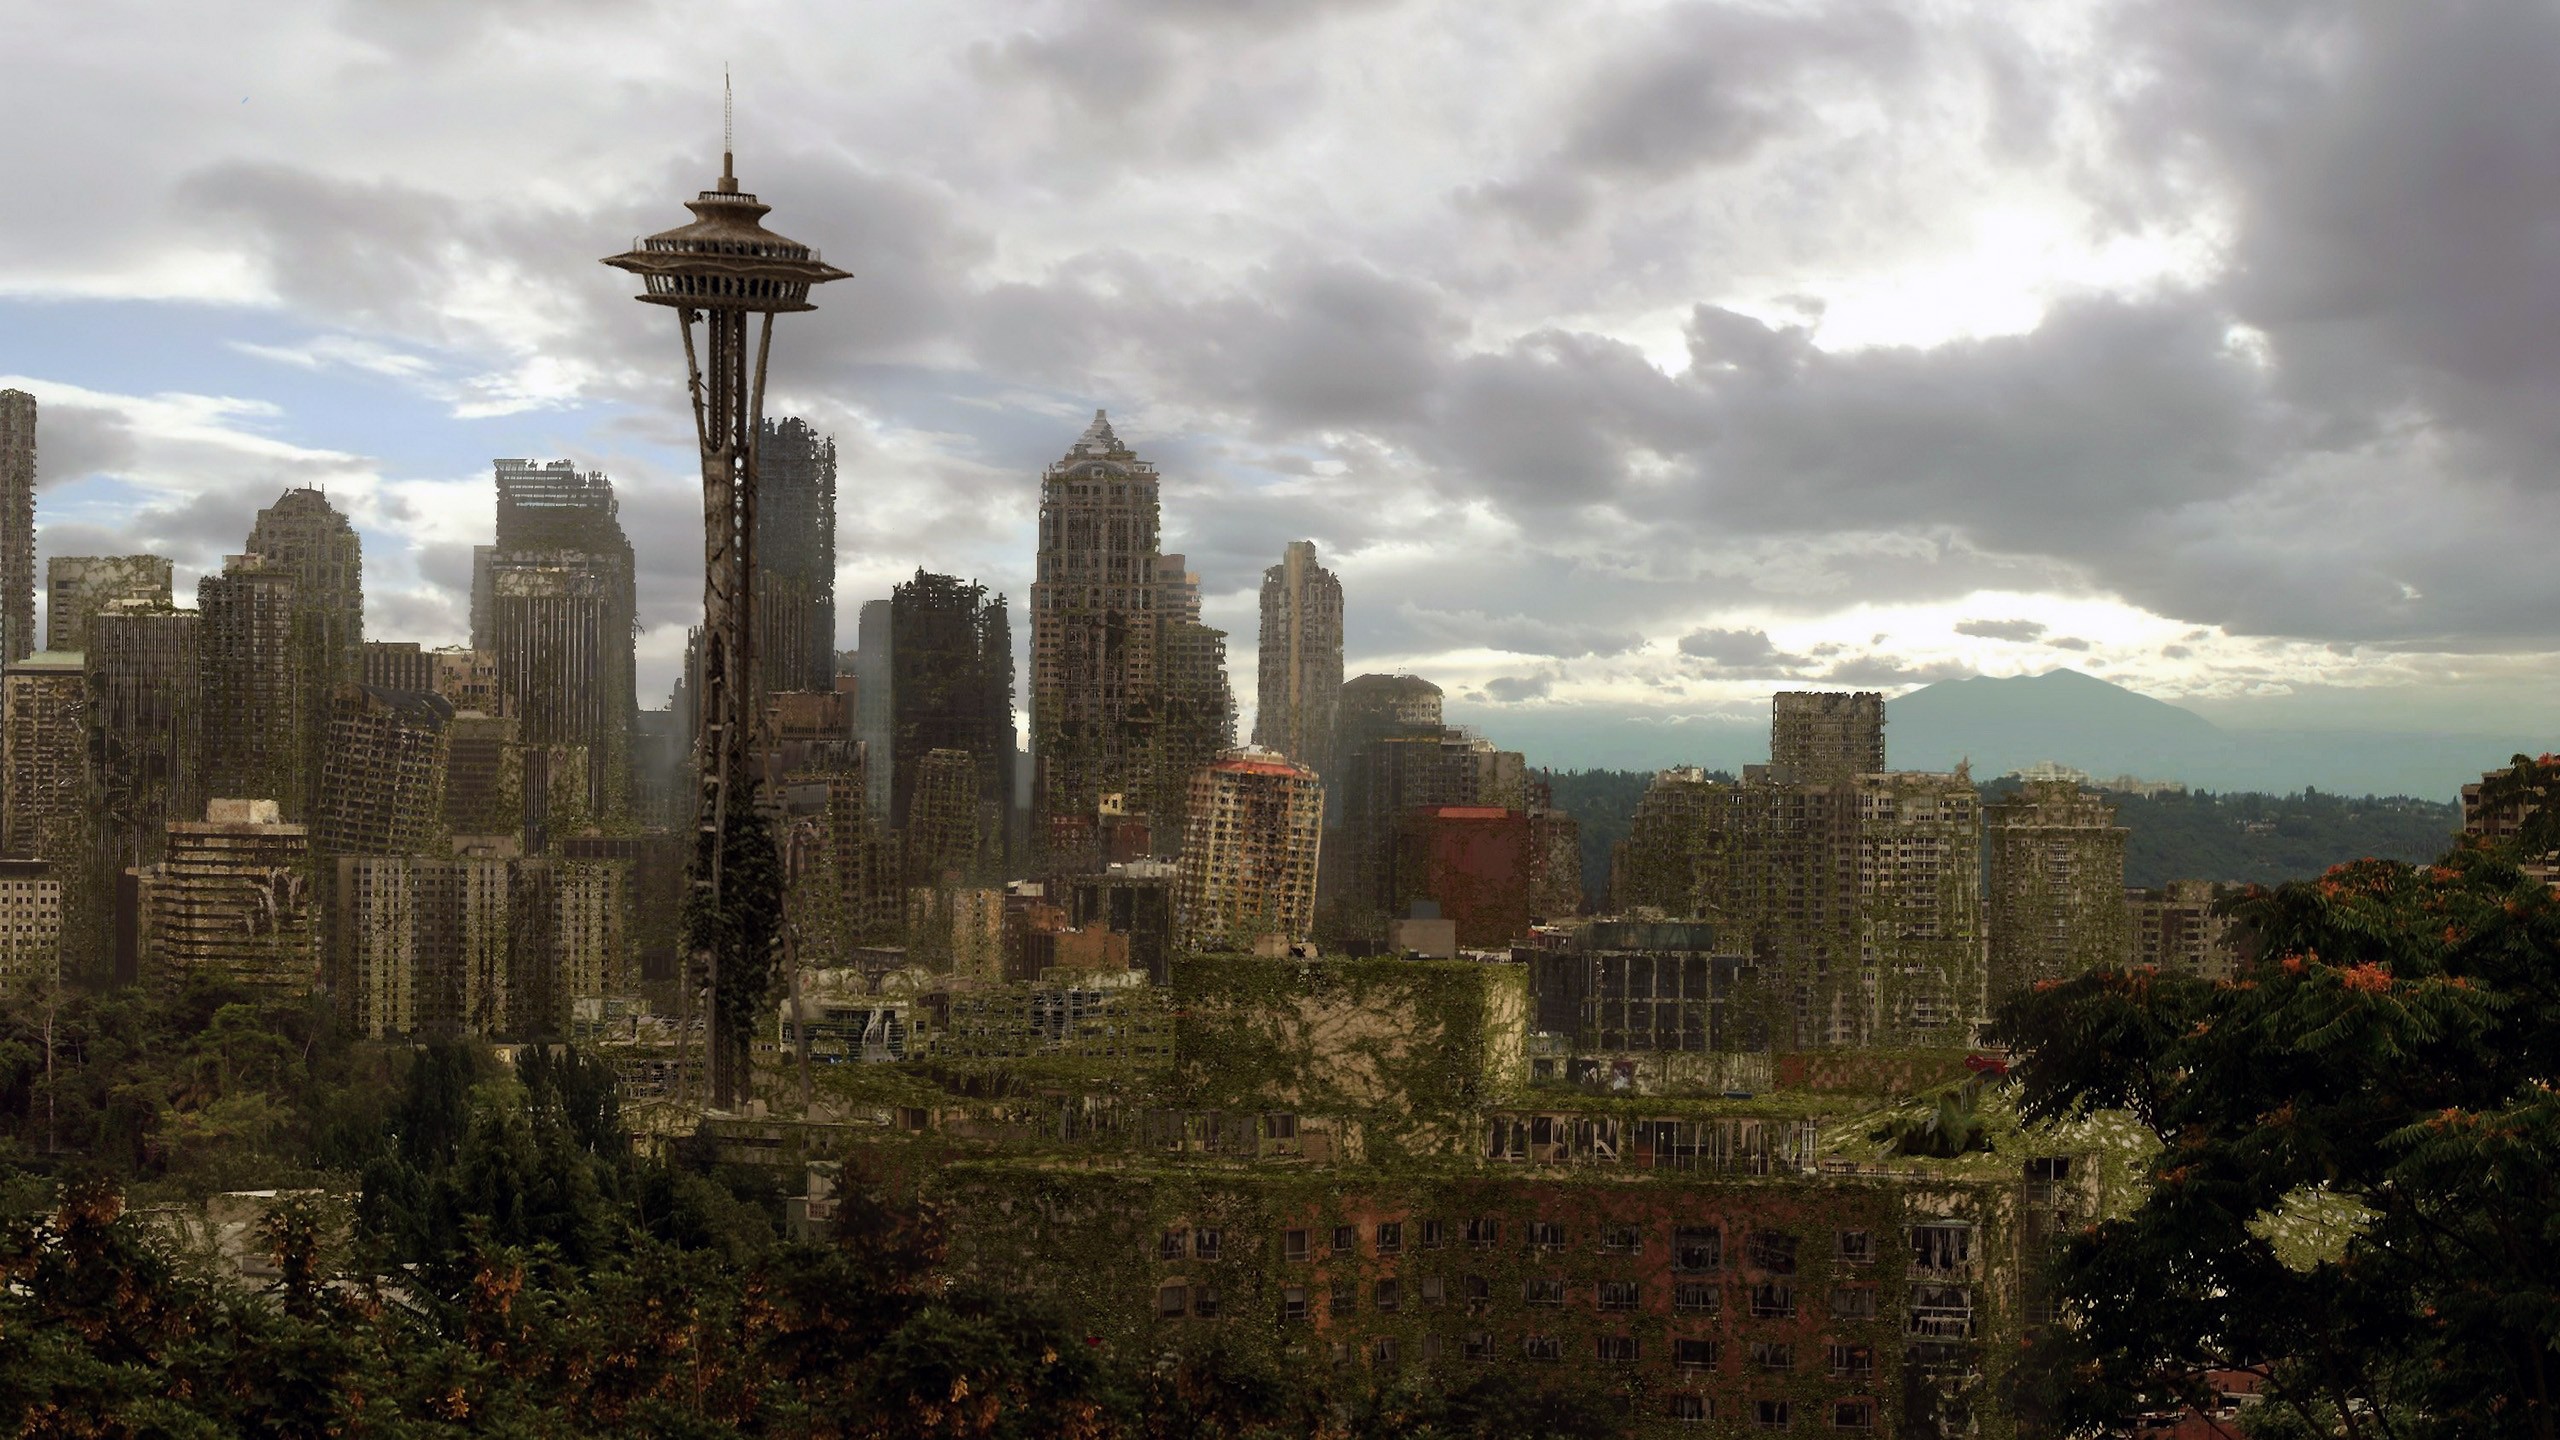 General 2560x1440 apocalyptic city building Seattle digital art cityscape futuristic science fiction ruins Space Needle Washington State USA